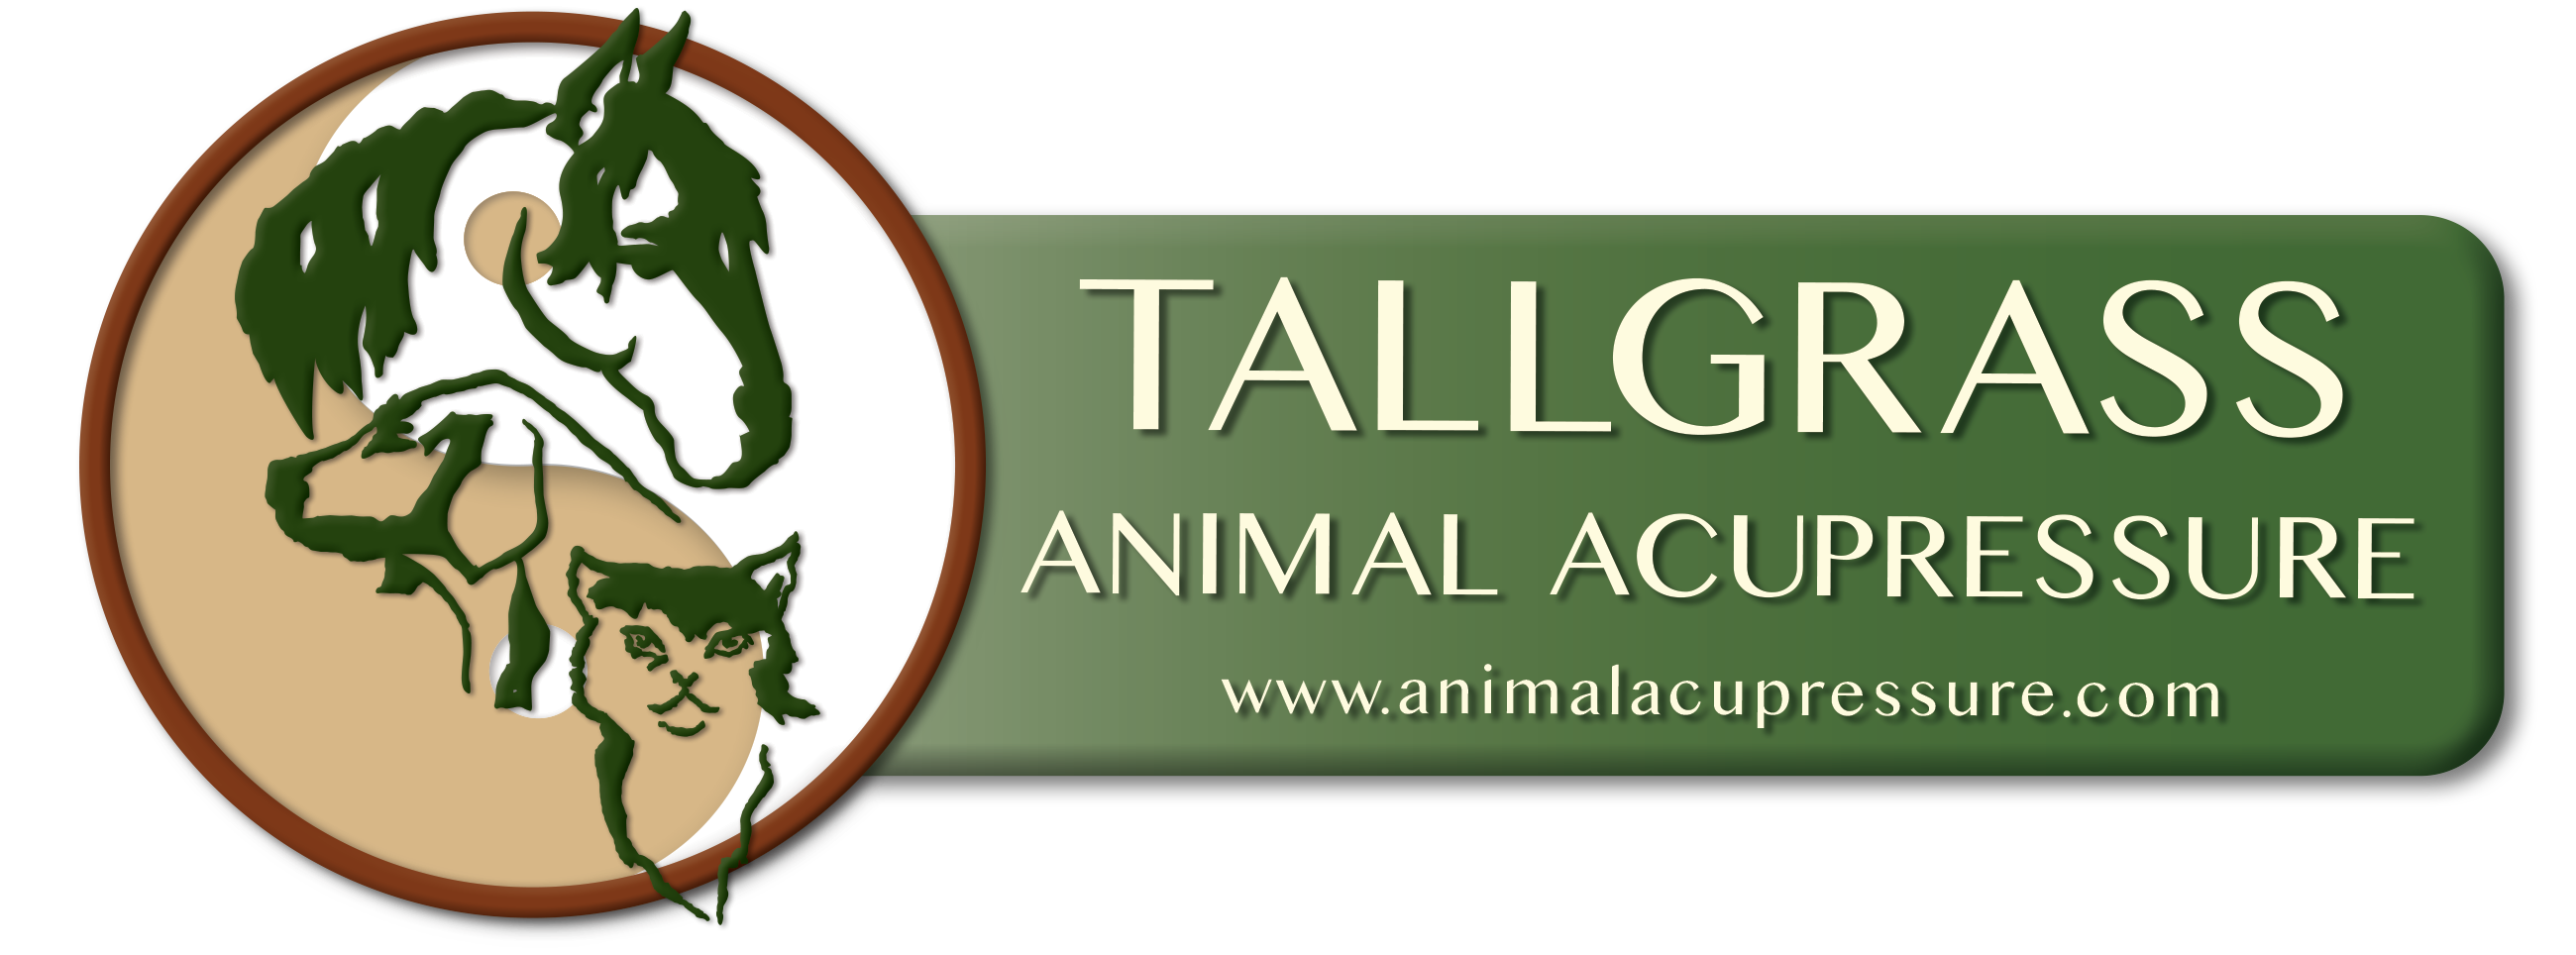 Tallgrass Animal Acupressure logo